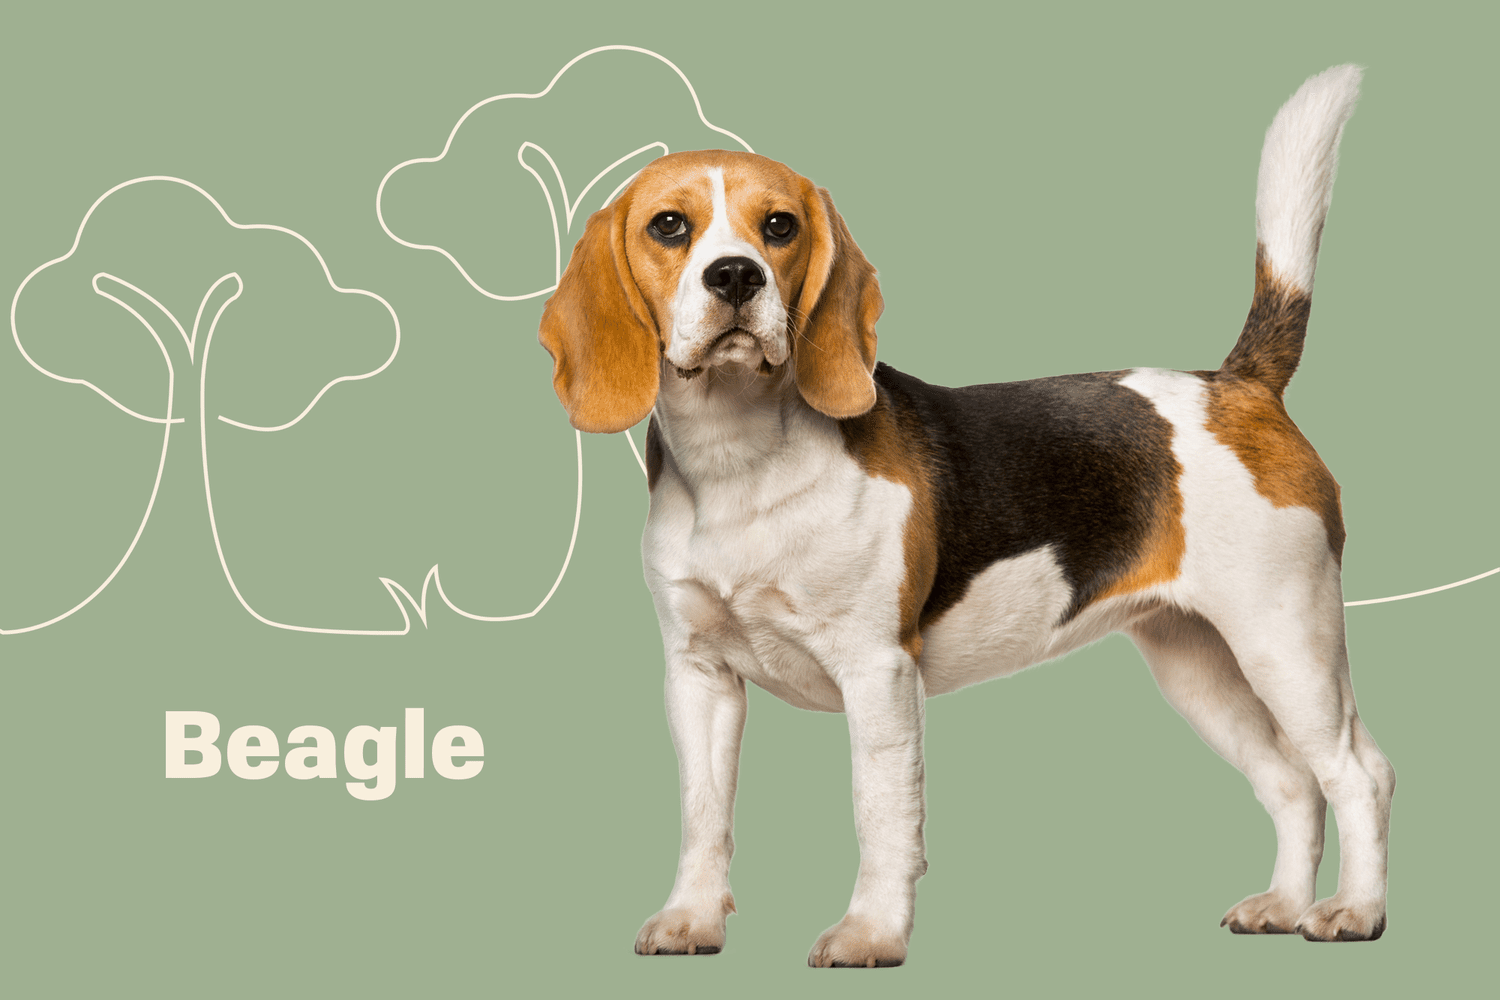 Beagle Dog Breeds: Overview, Description, Temperament, & Top 1 Amazing Facts